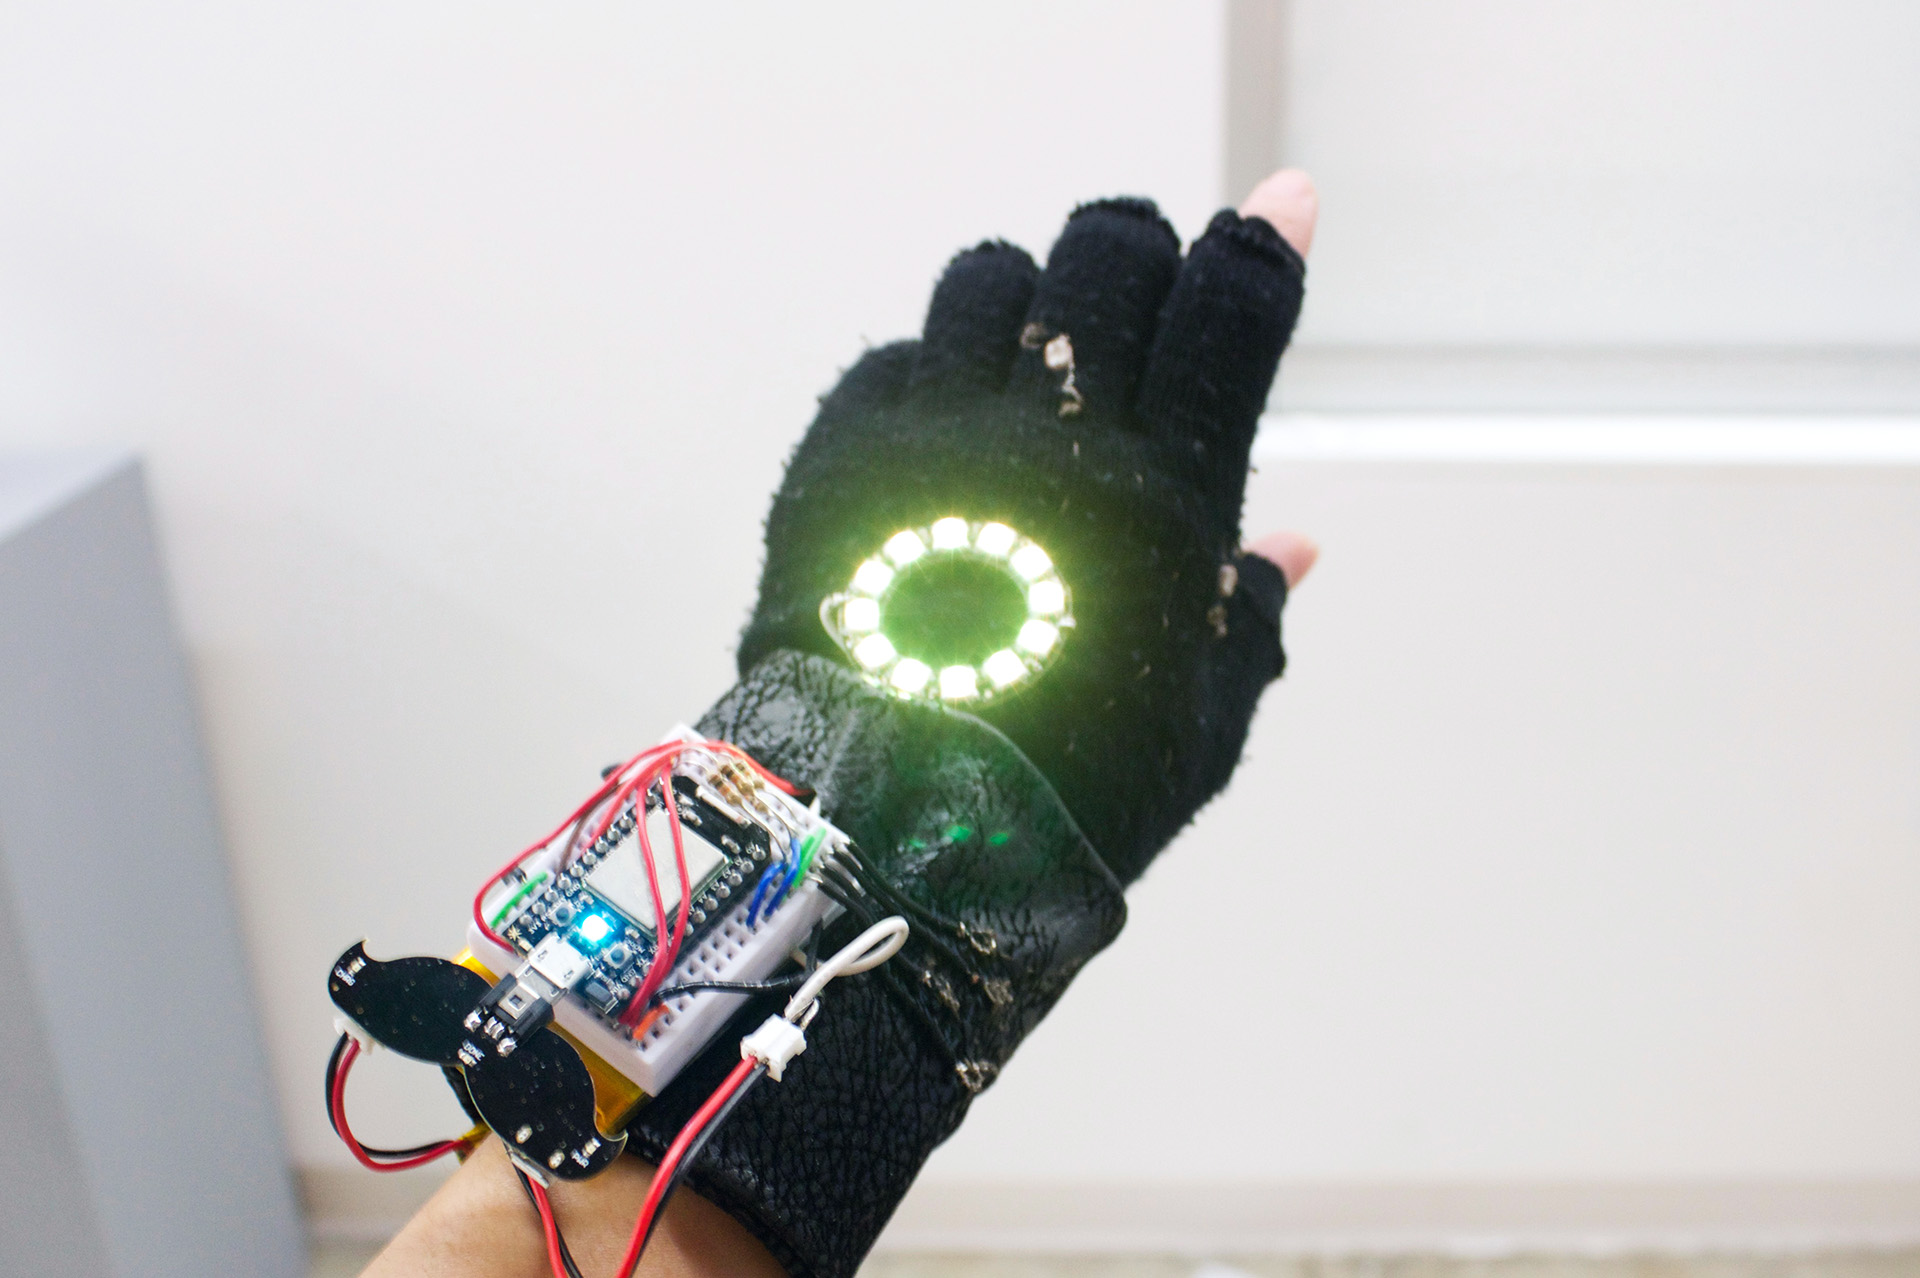 Smart Glove Project